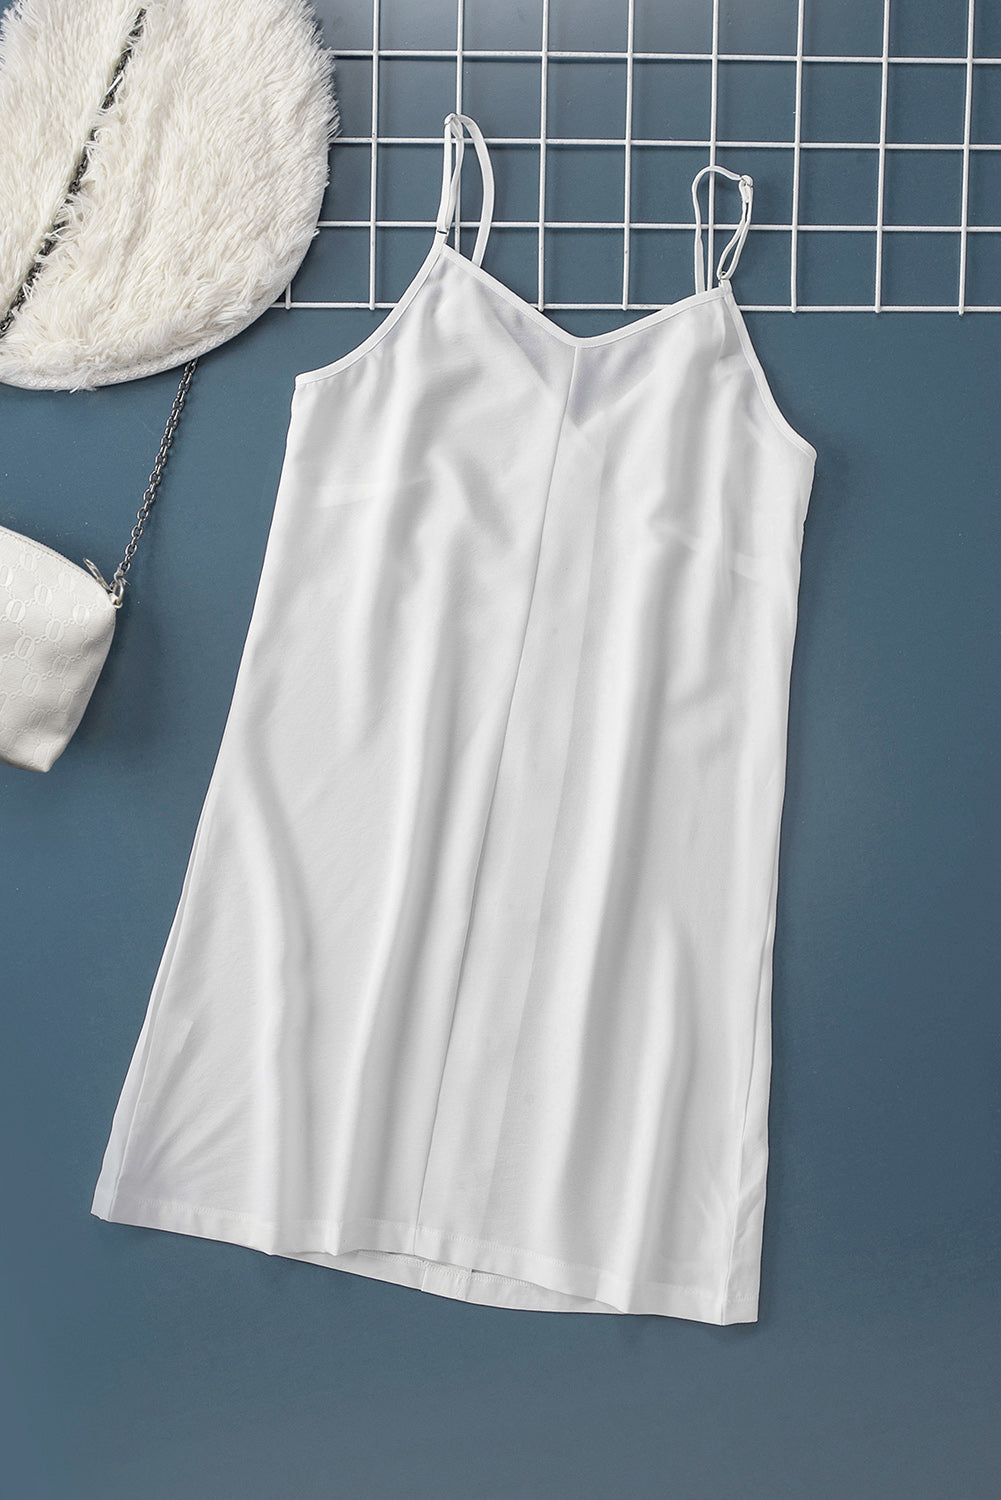 White Buttoned Slip Dress